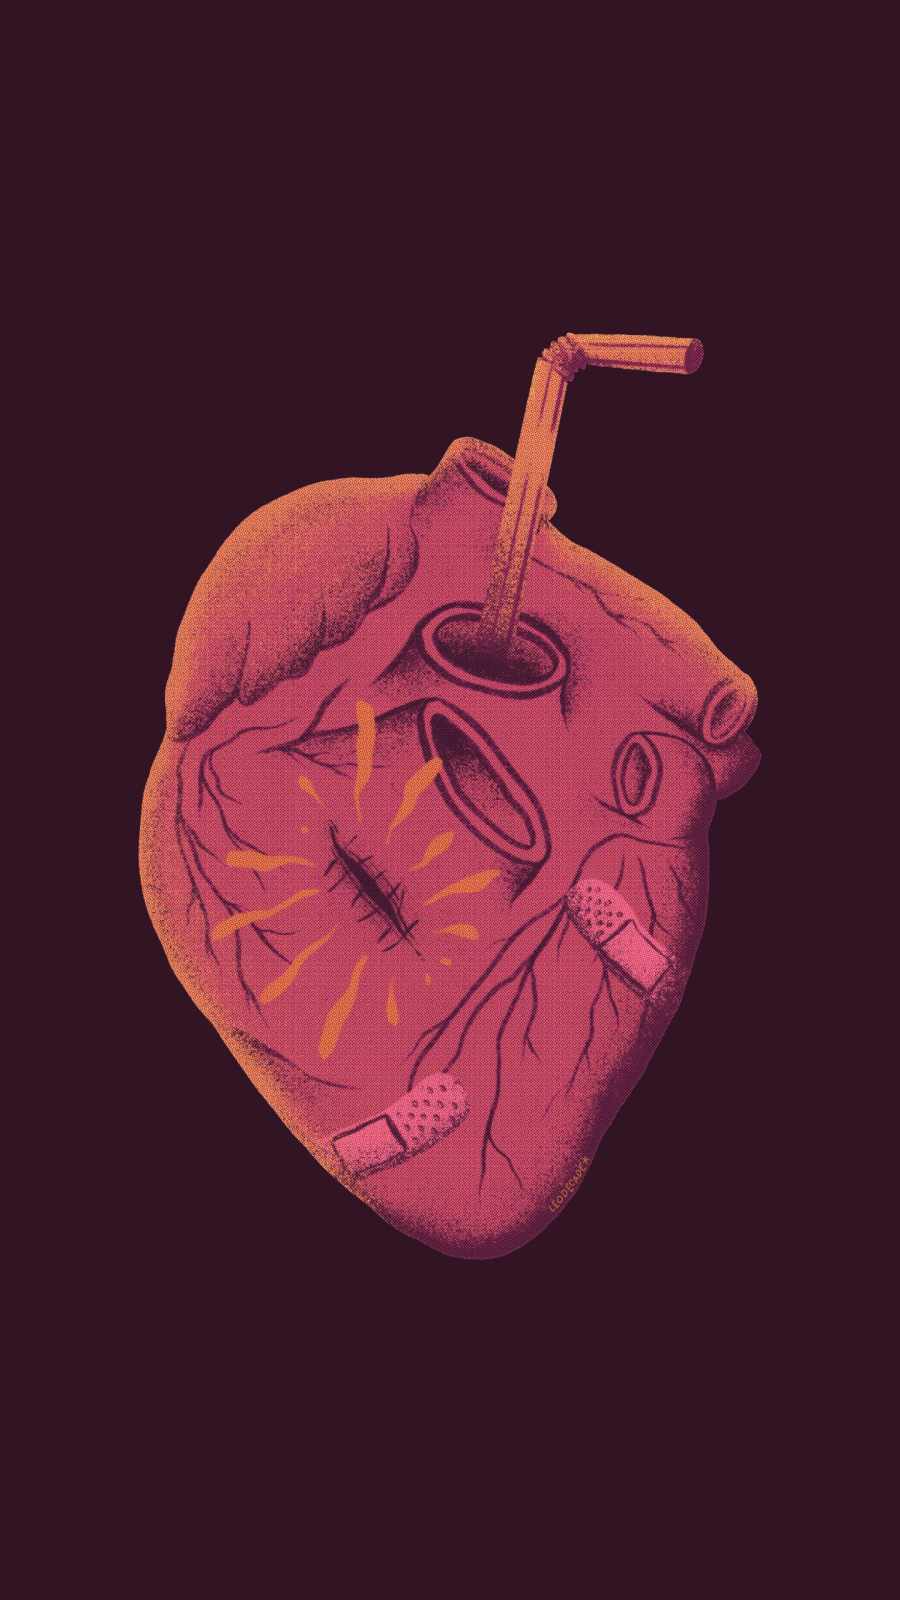 Free Heart Anatomy Art Photos and Vectors